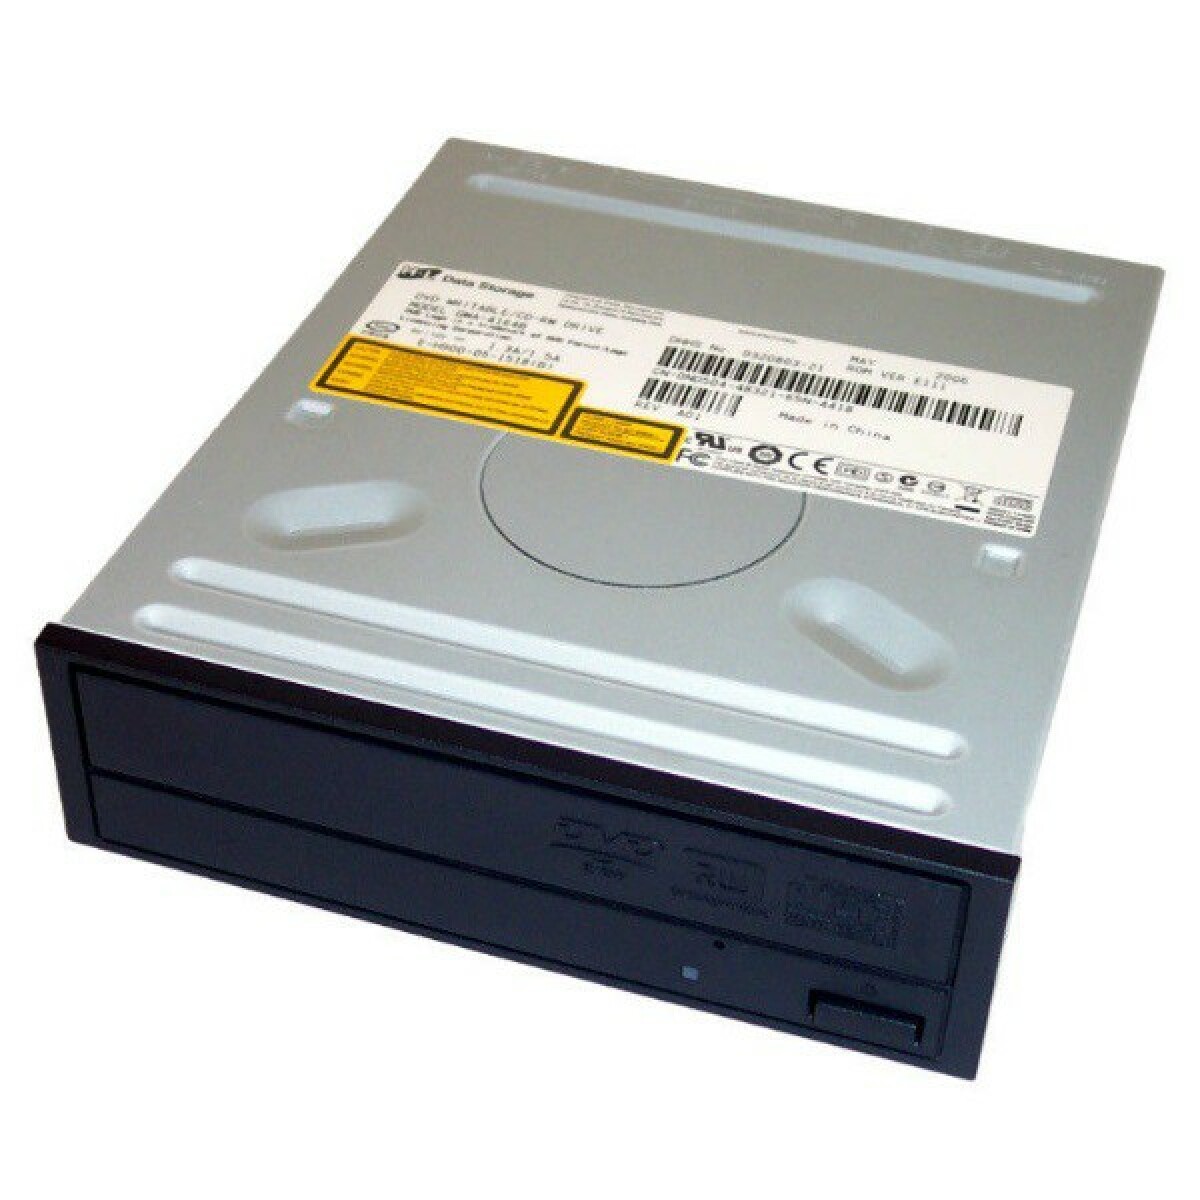 Graveur DVD/Lecteur Blu-ray Hitachi-Lg Data Storage Graveur interne CD/DVD+R/+RW Hitachi LG GWA-4164B DVD16x IDE ATA Noir Tiroir